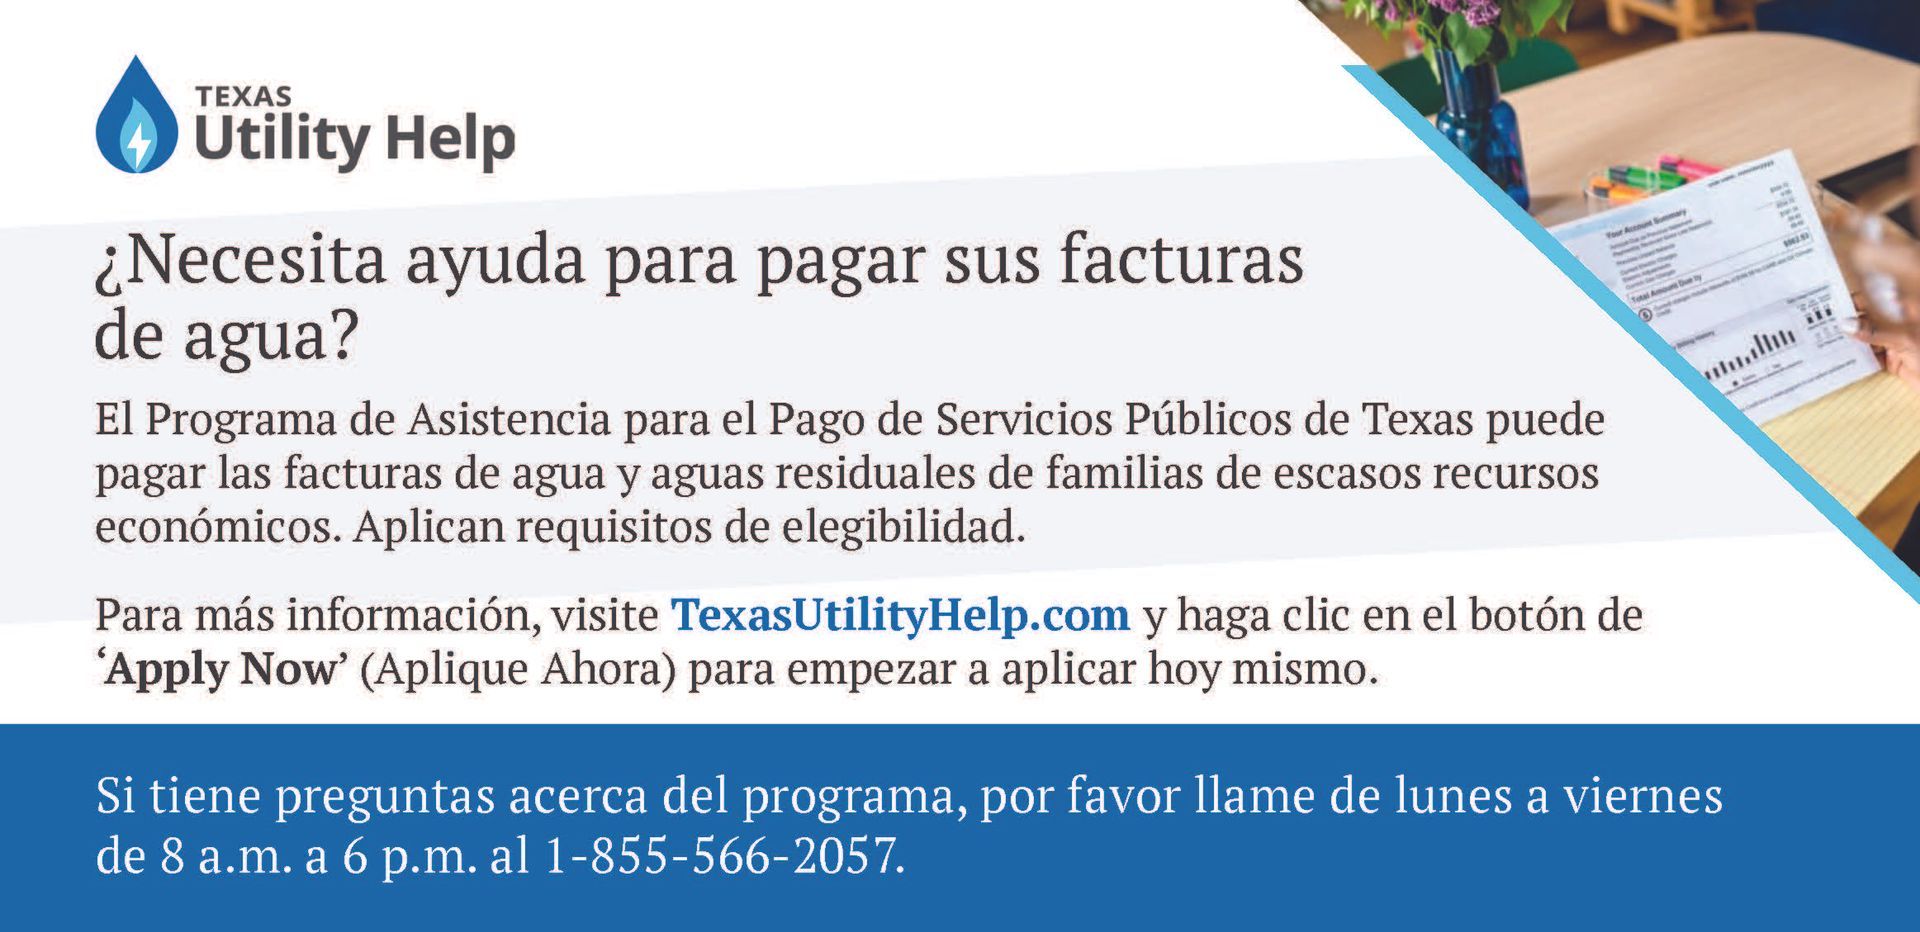 Texas Utility Help program announcement in spanish